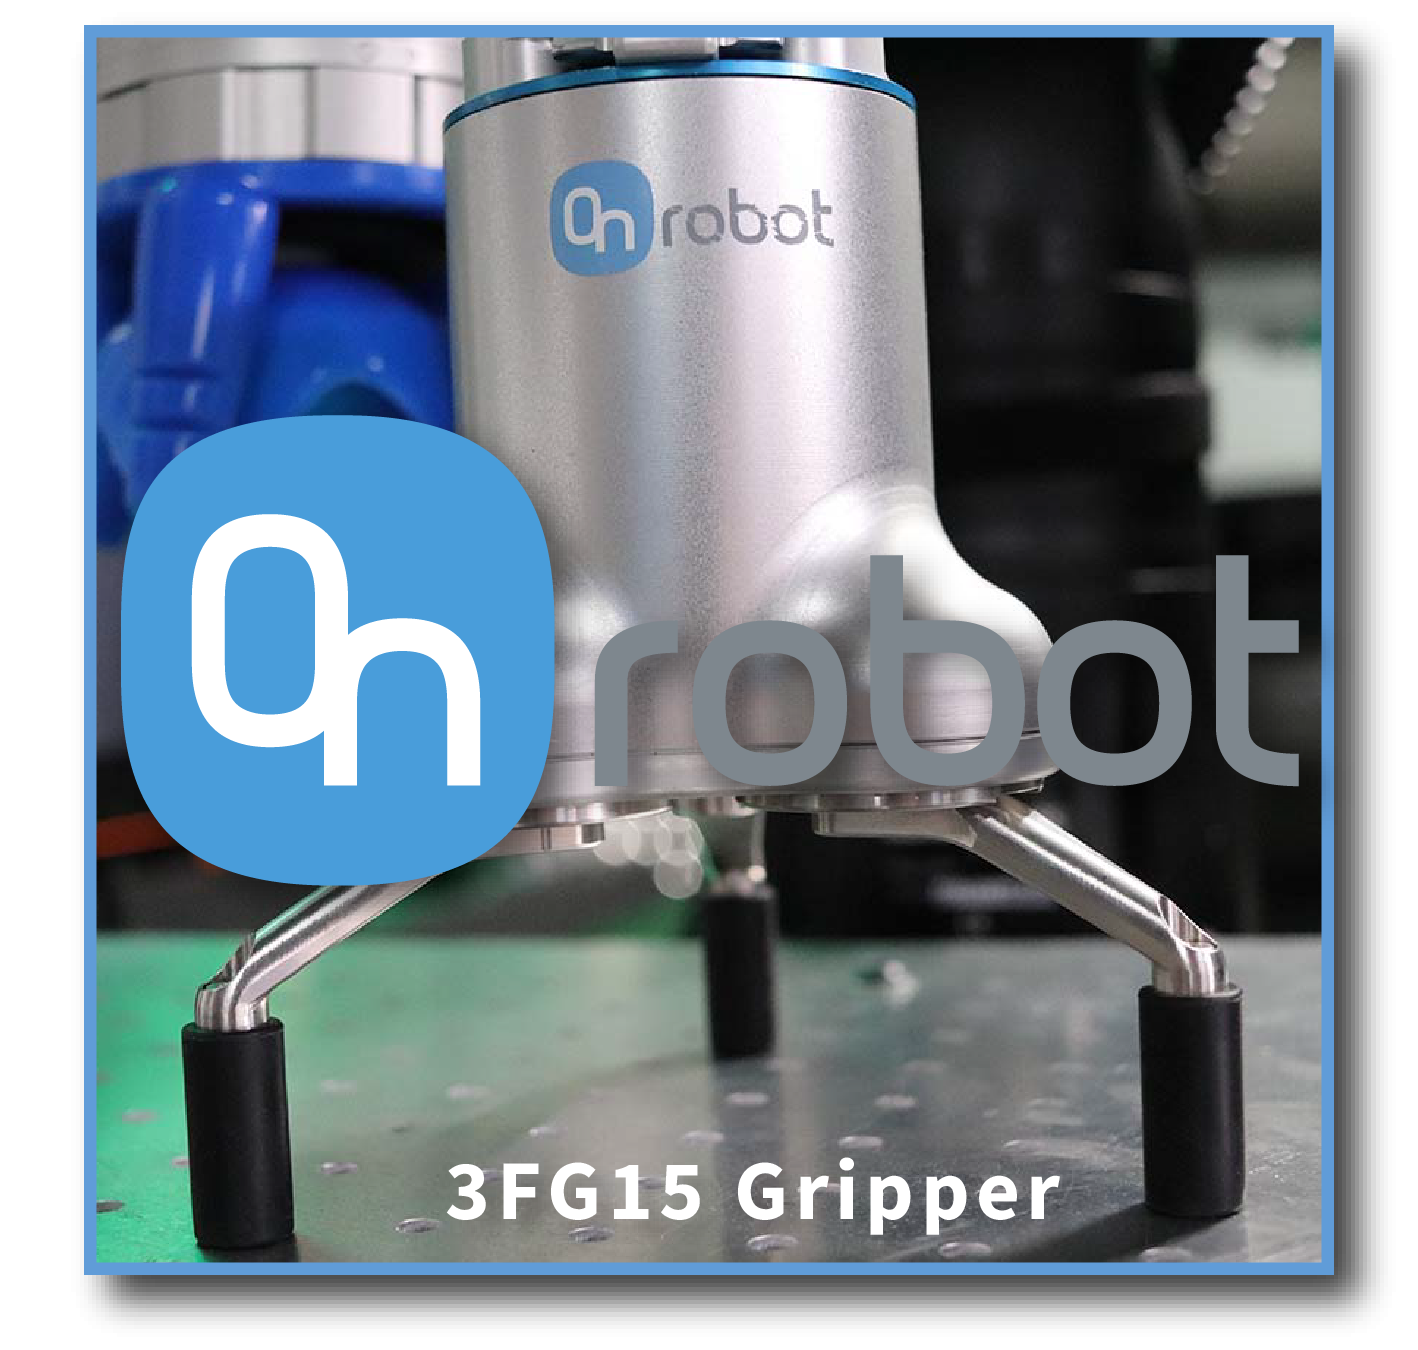 OnRobot 3FG15 Gripper in Action